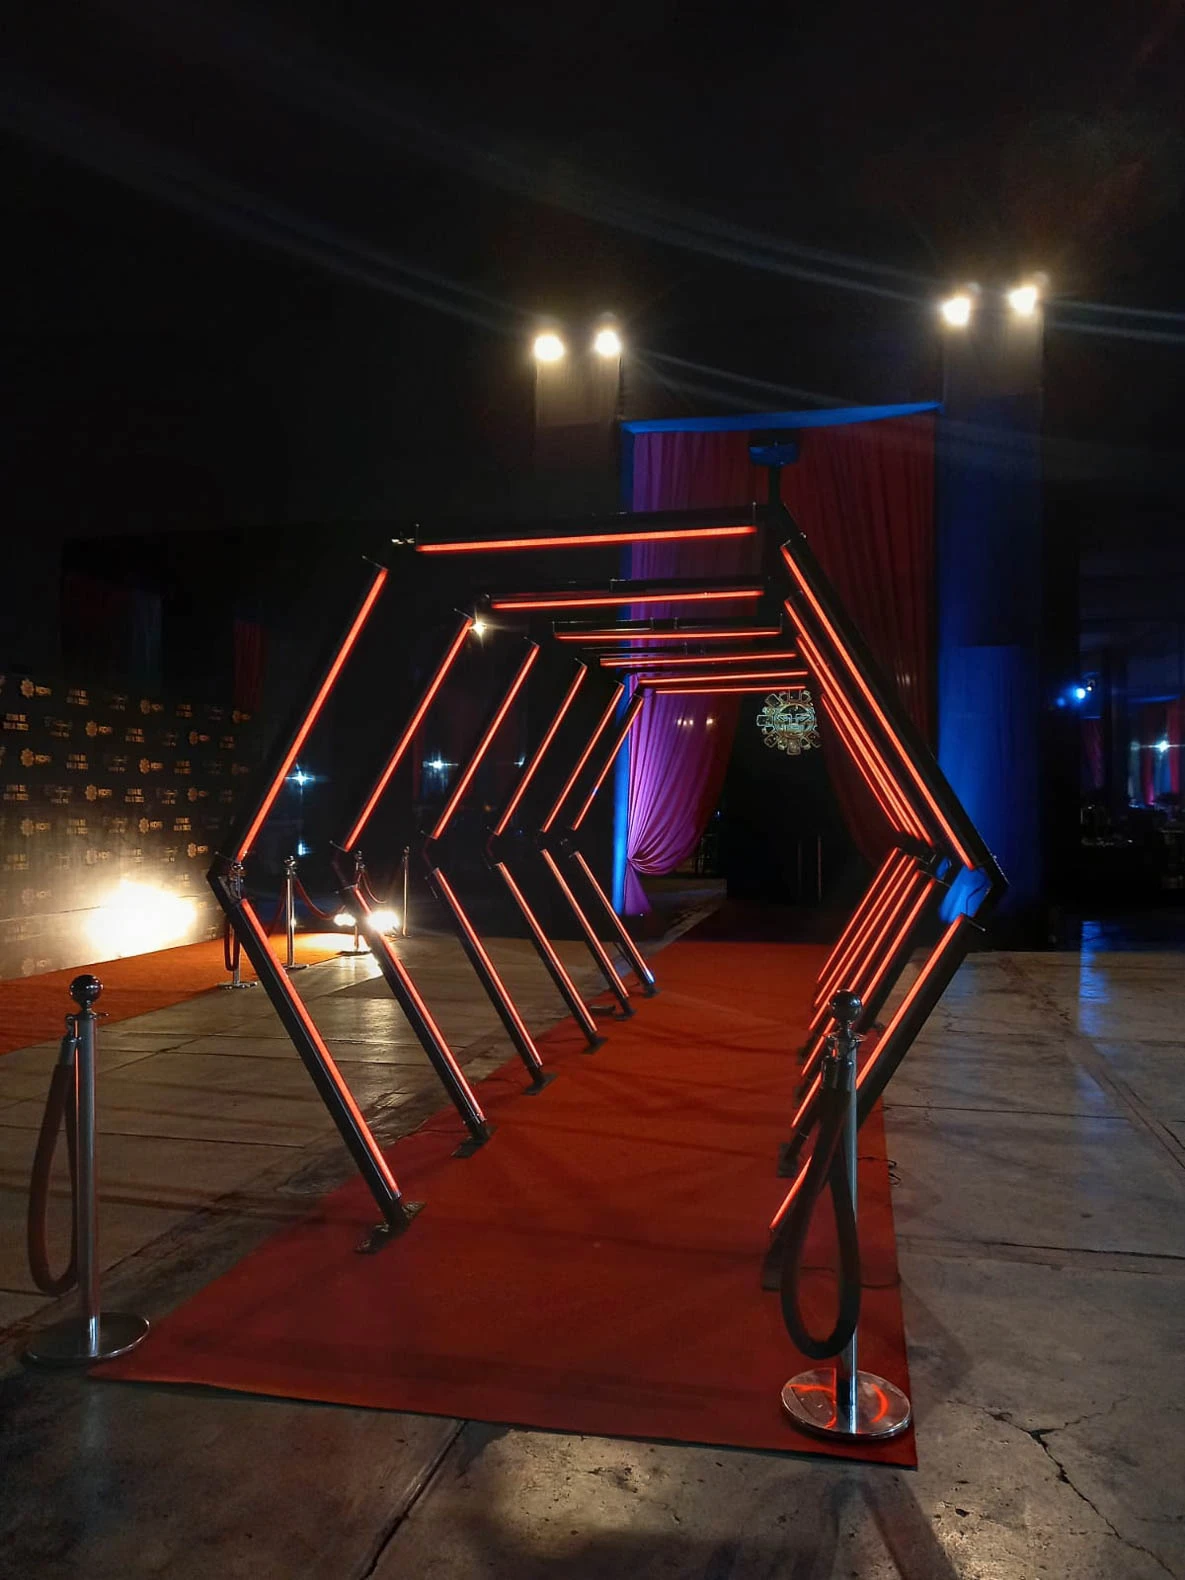 Túnel LED hexagonal rojo: Entrada dramática con personas ingresando al evento, capturando momentos memorables. - Túnel hexagonal led - scratch perú.